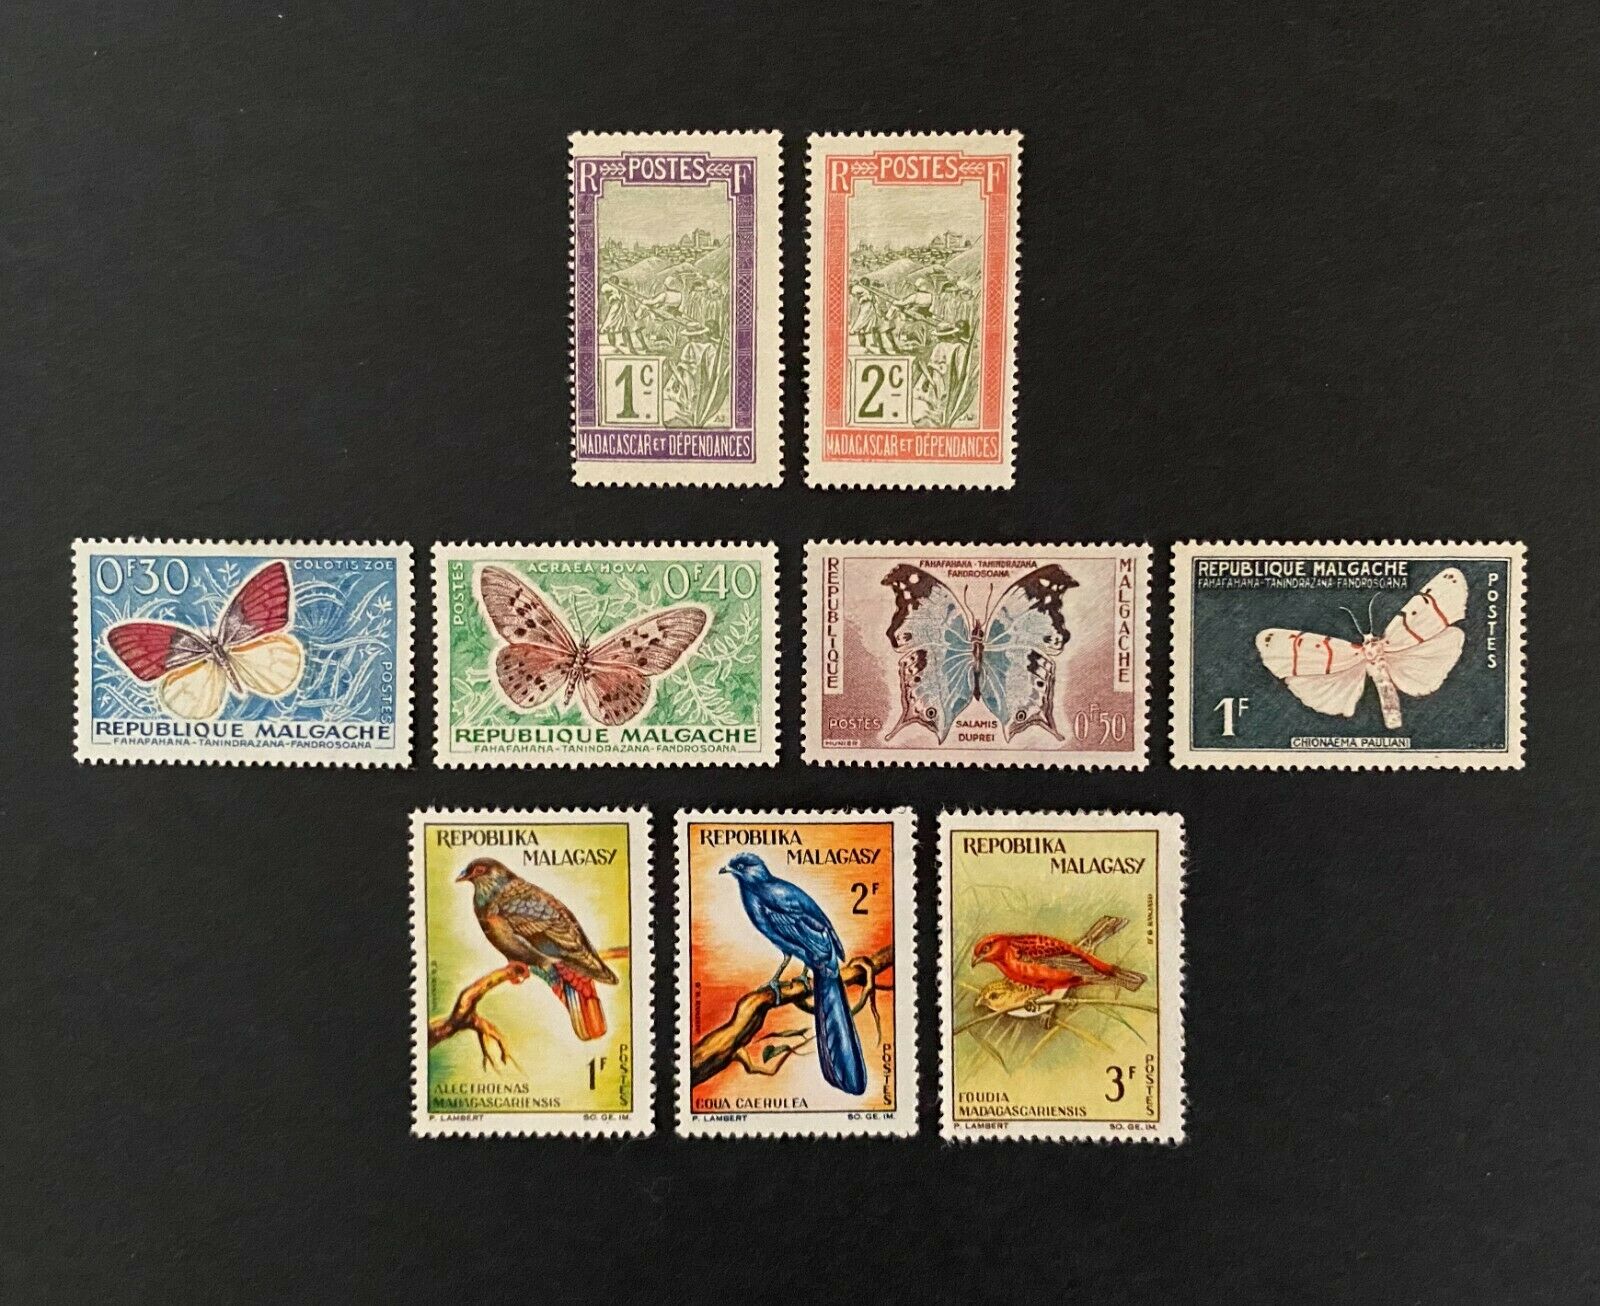 Madagascar Stamps, 1908-1963 - 9 Mint Hinged - Butterflies, Birds, Sedan Chair